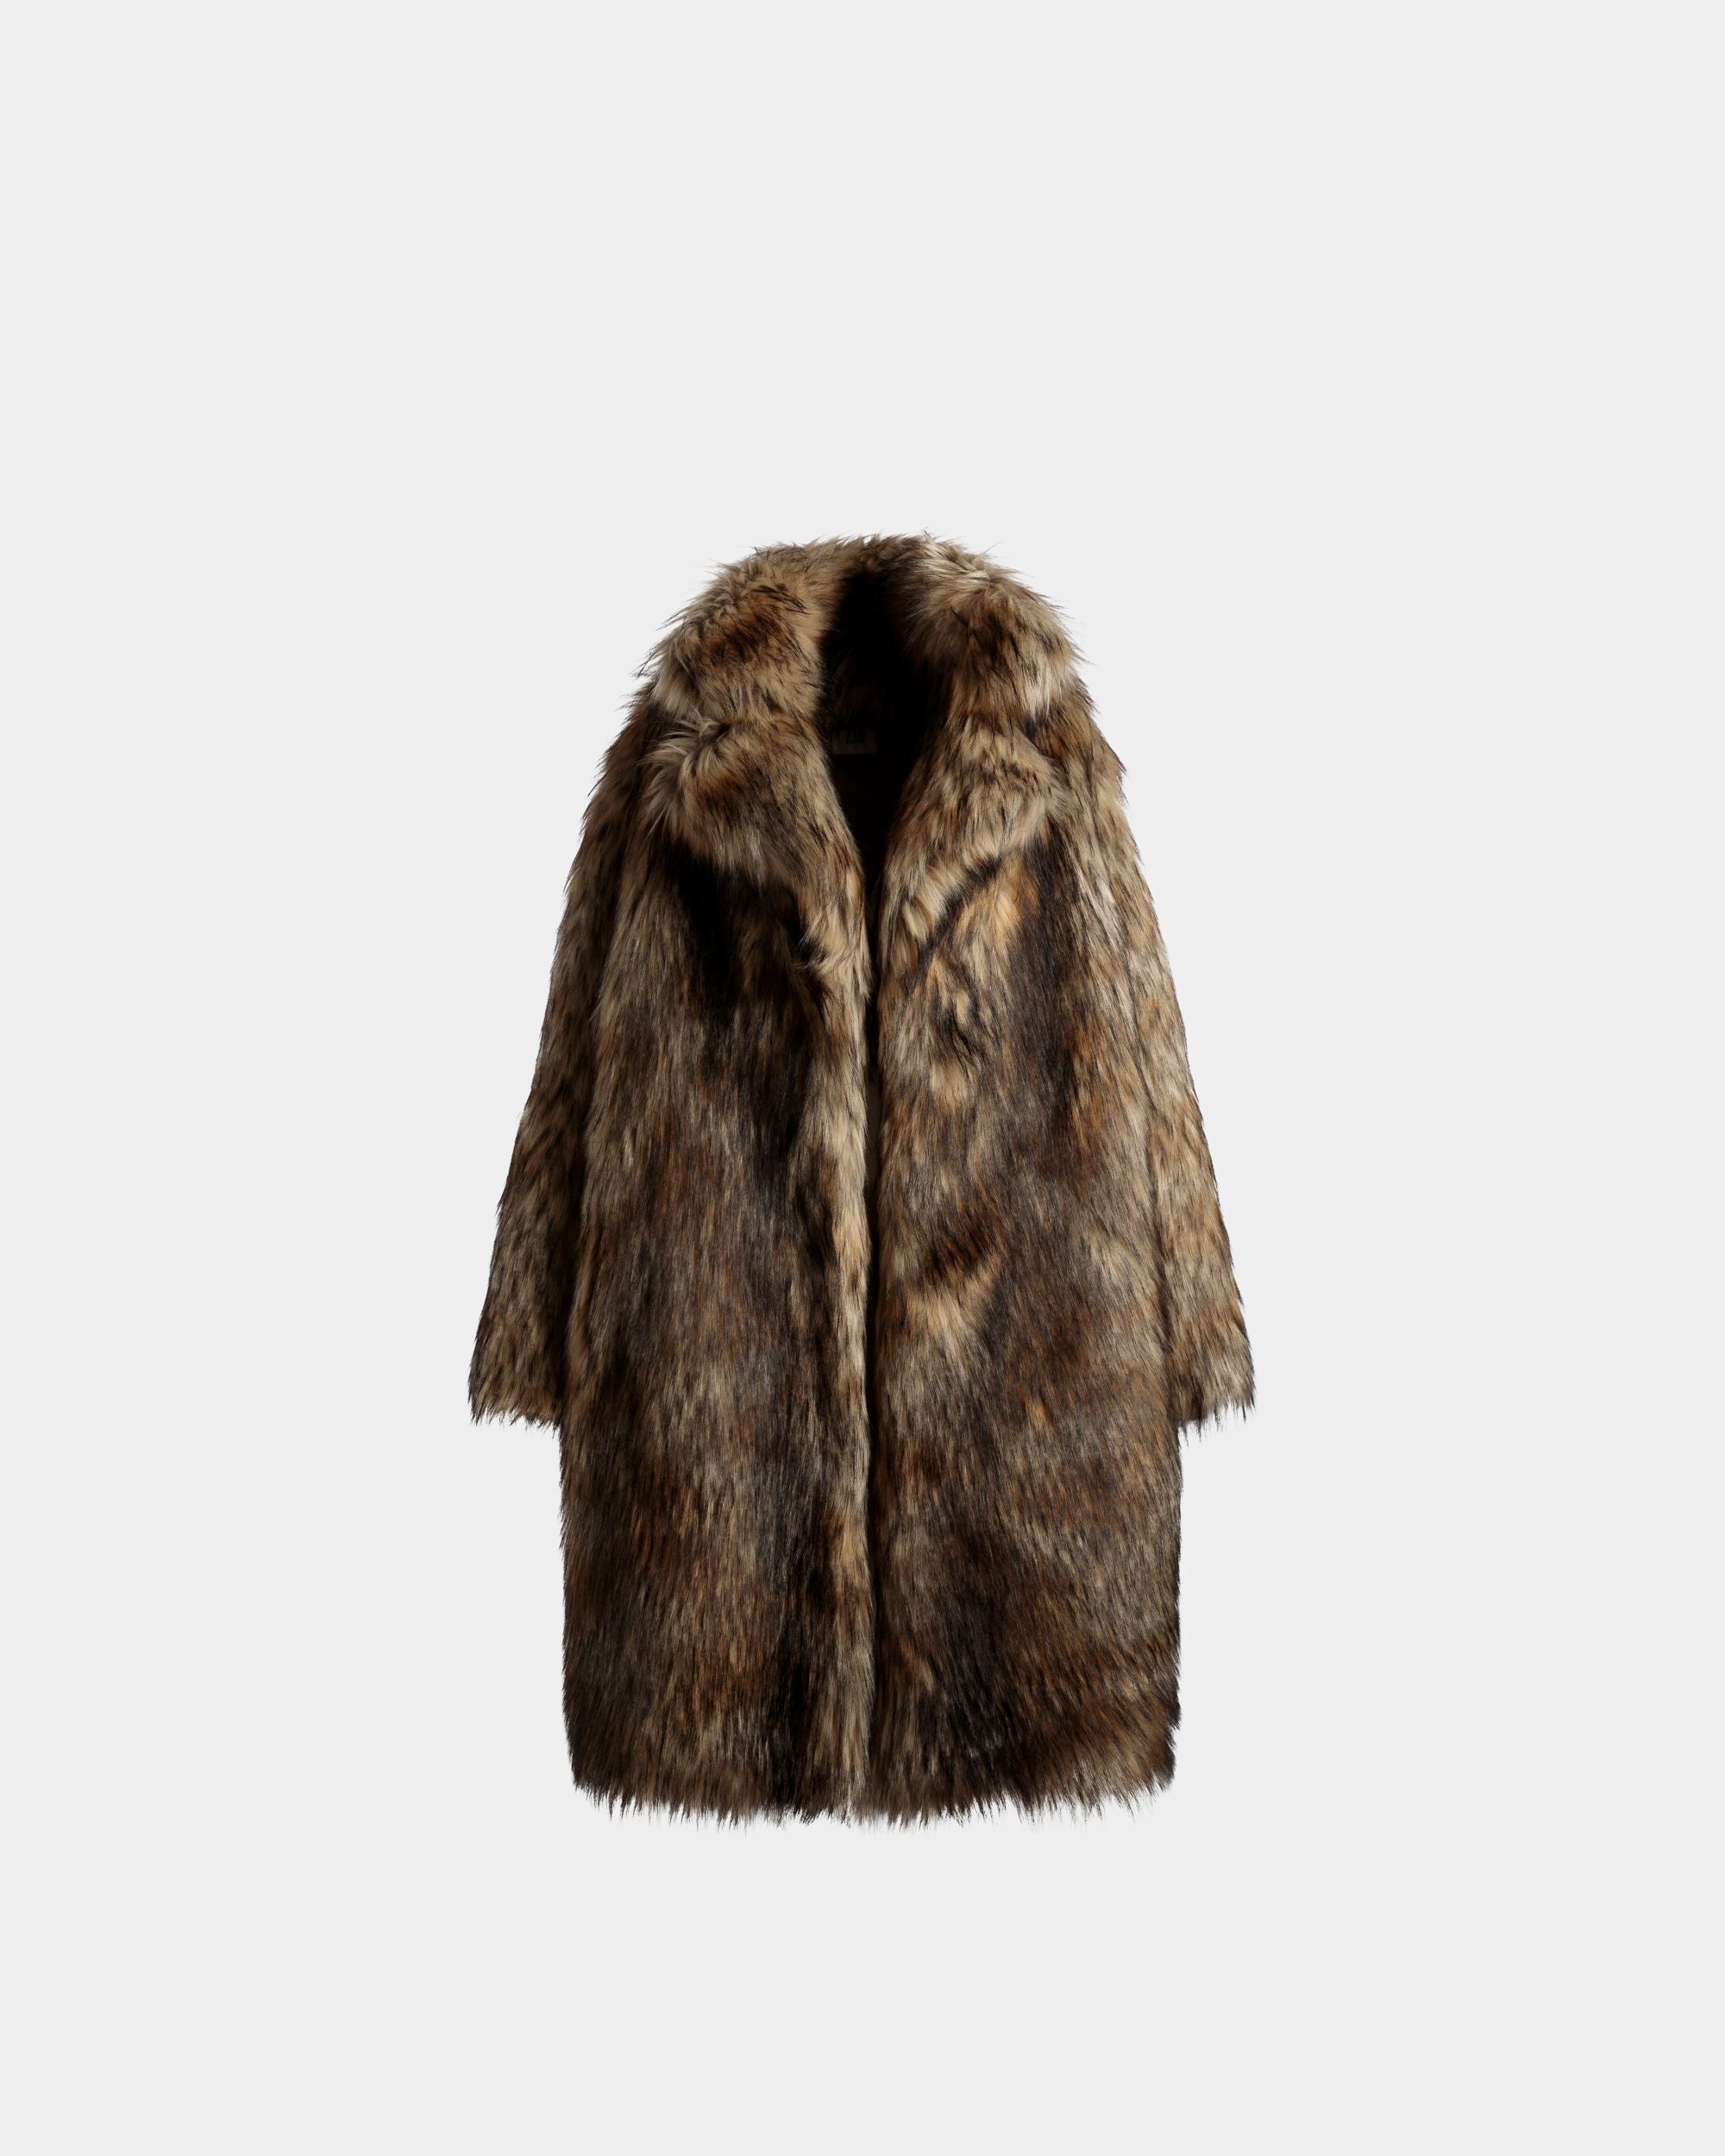 Faux Fur Coat | Women's Coat | Brown Faux Fur | Bally | Still Life Front